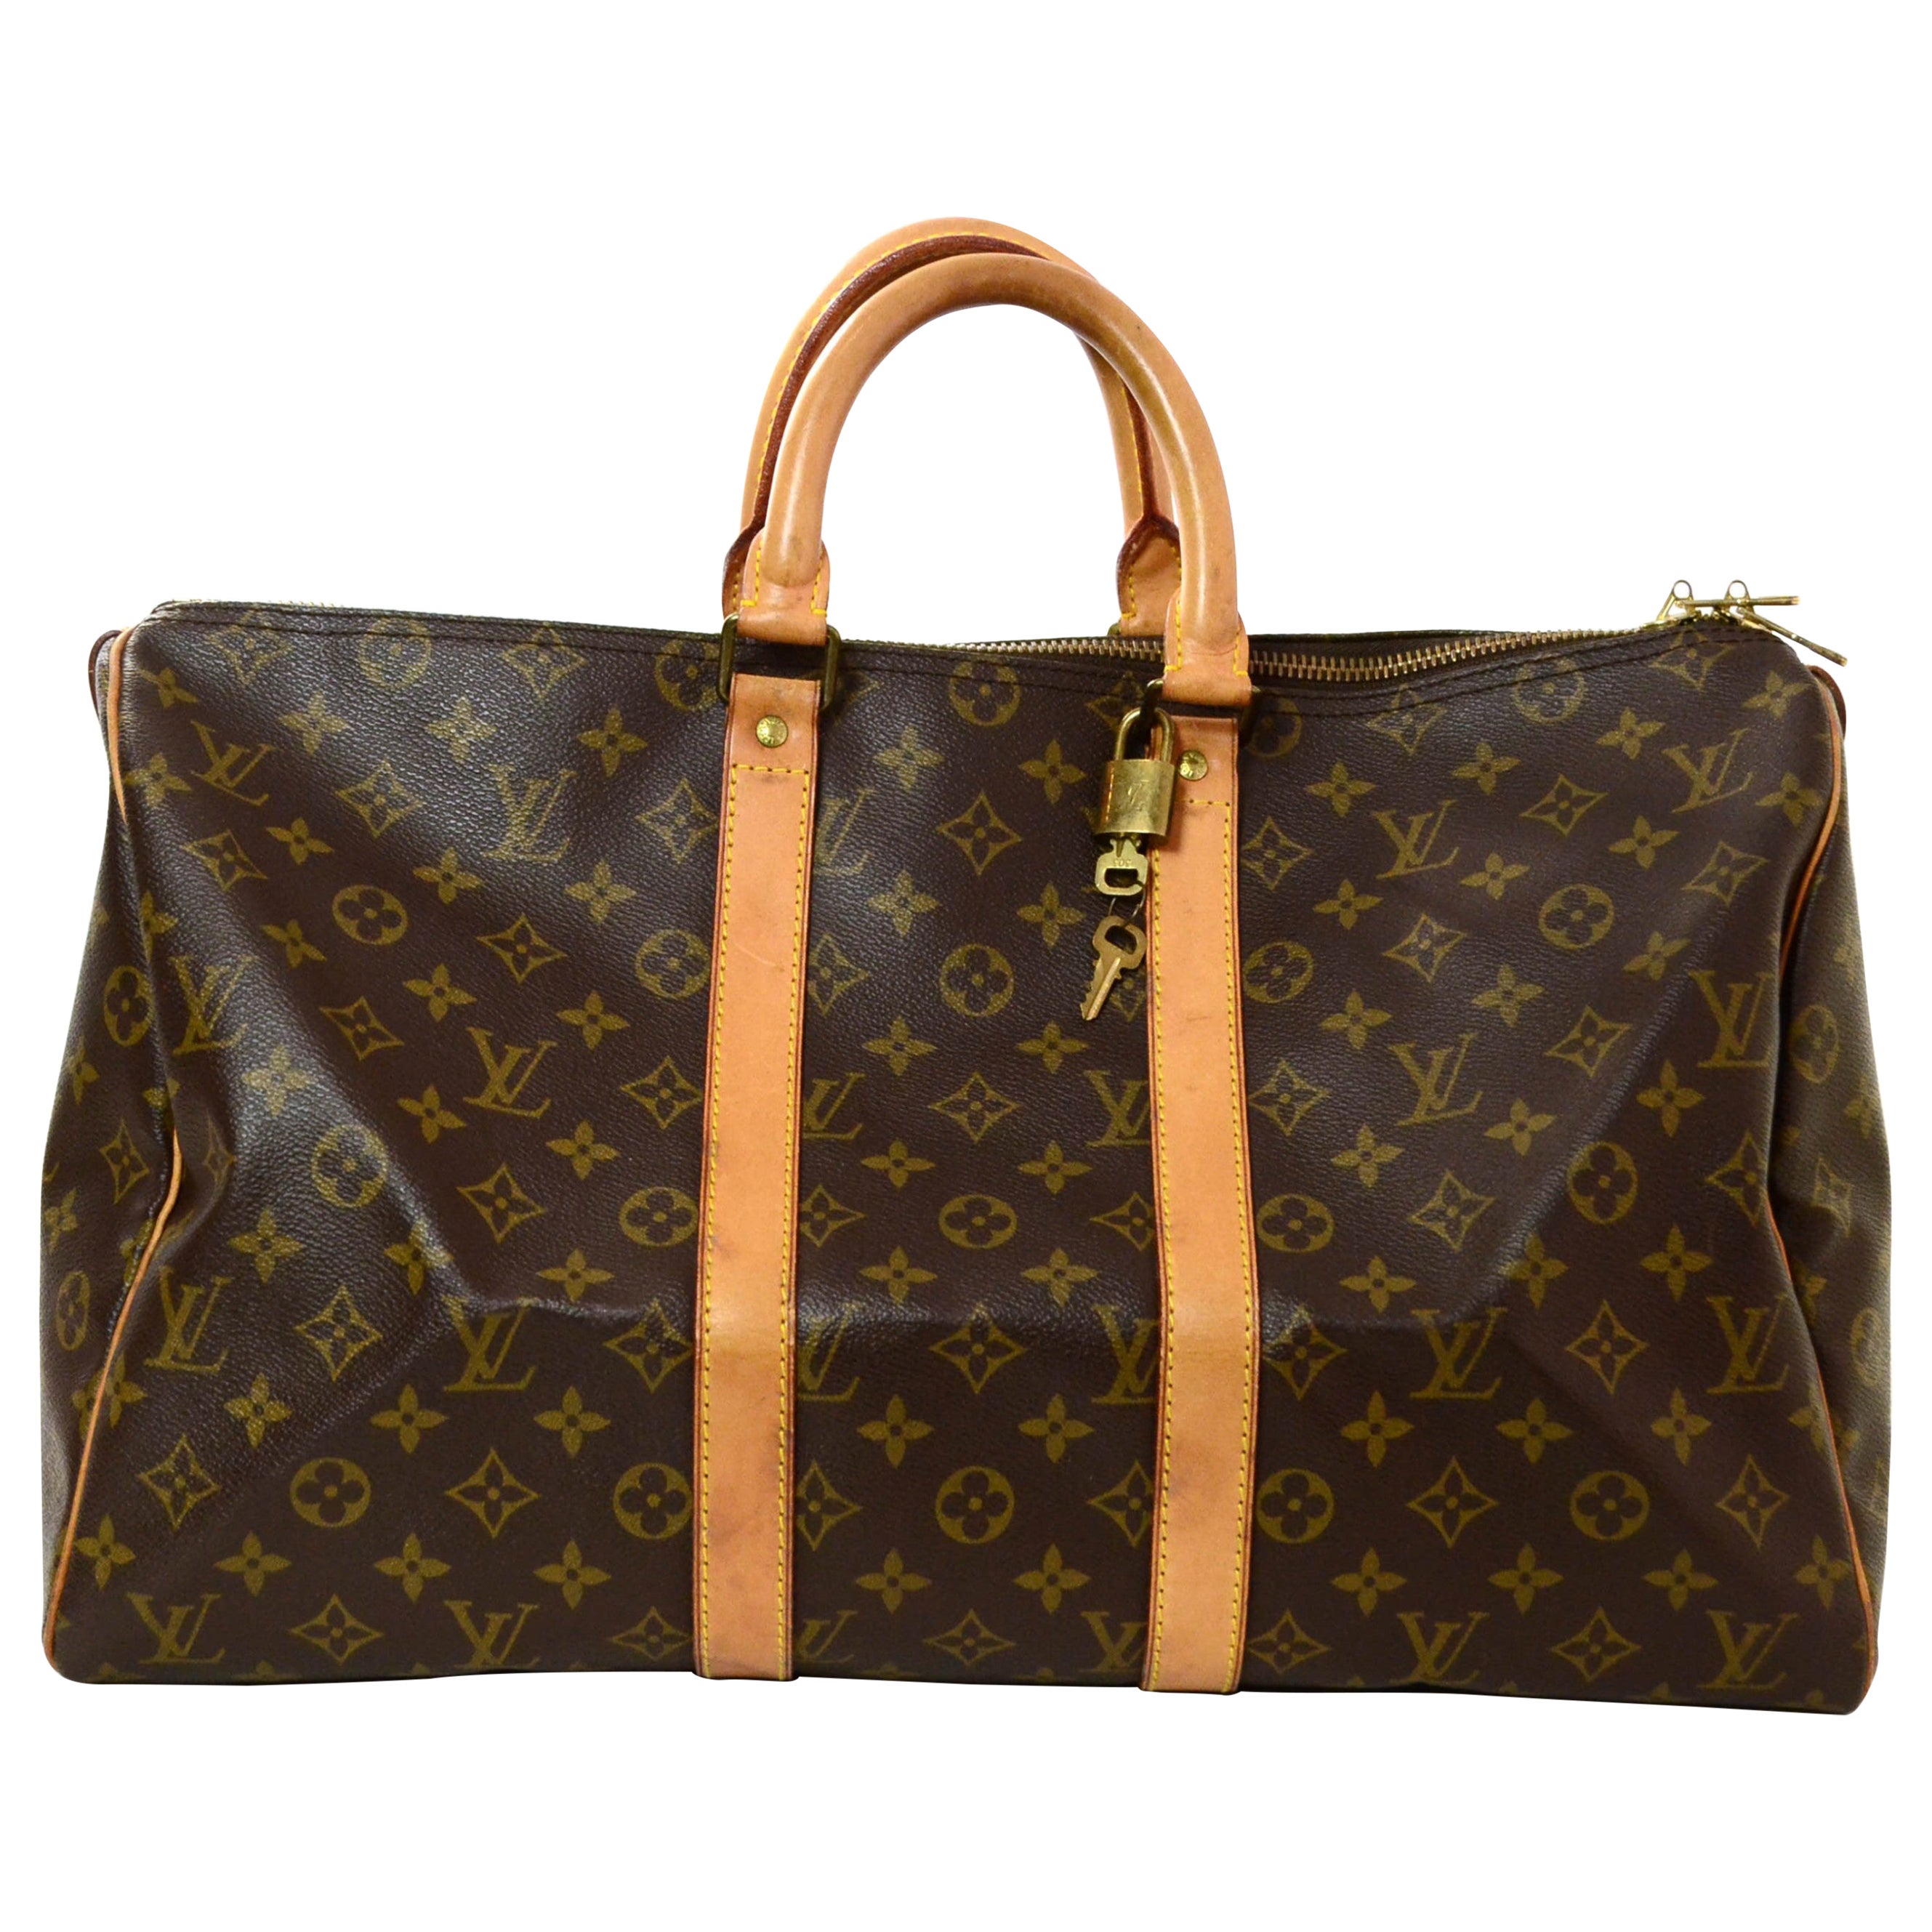 Bonhams to Auction Rare Louis Vuitton, Chanel Bags